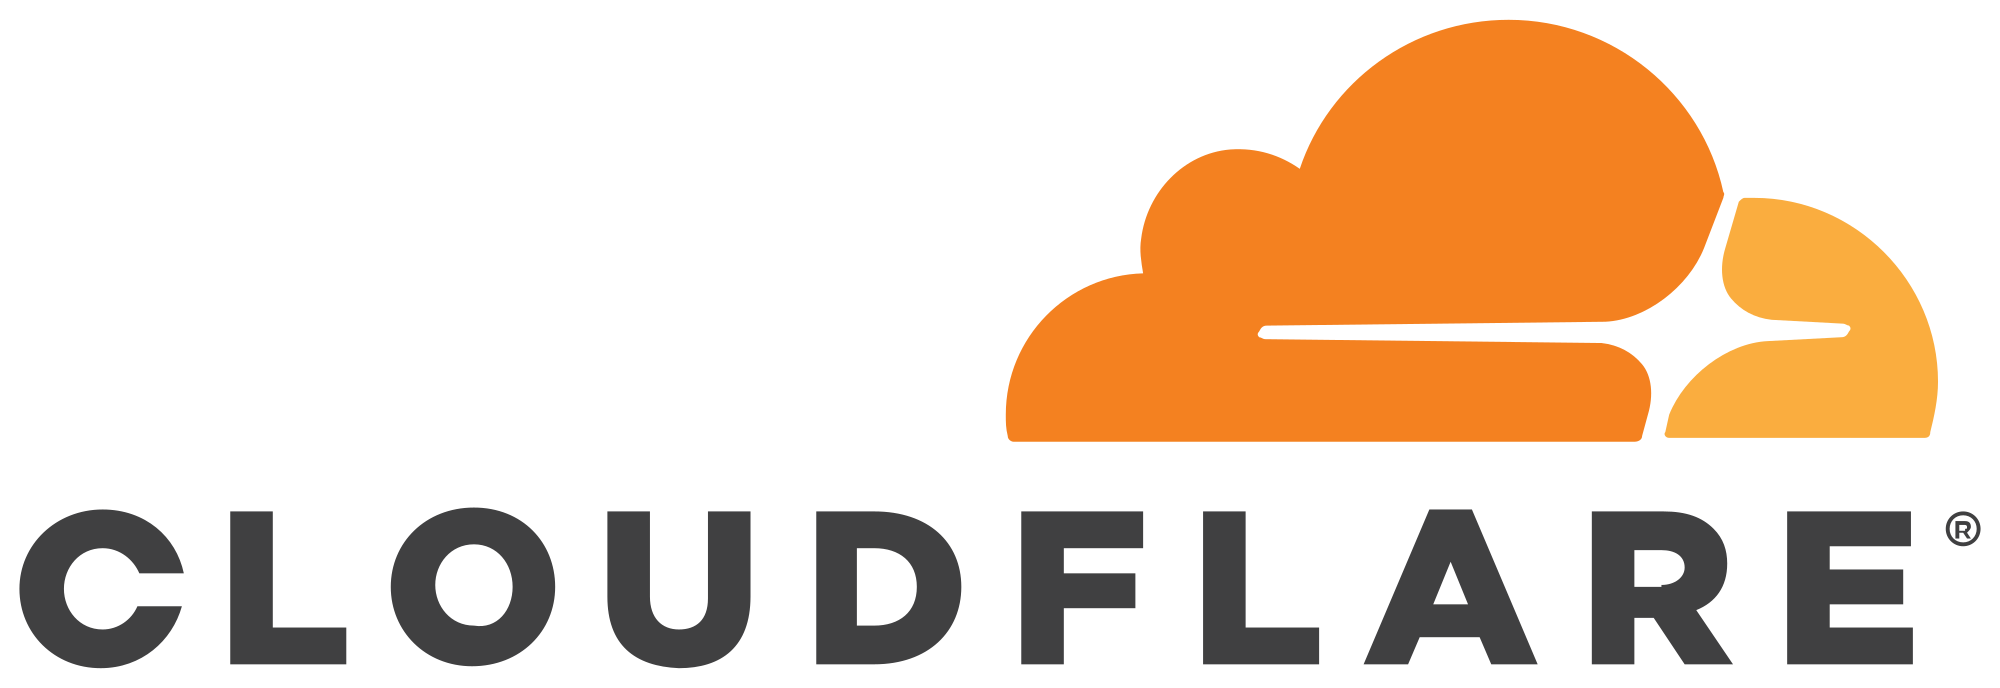 2000px-Cloudflare_logo.svg